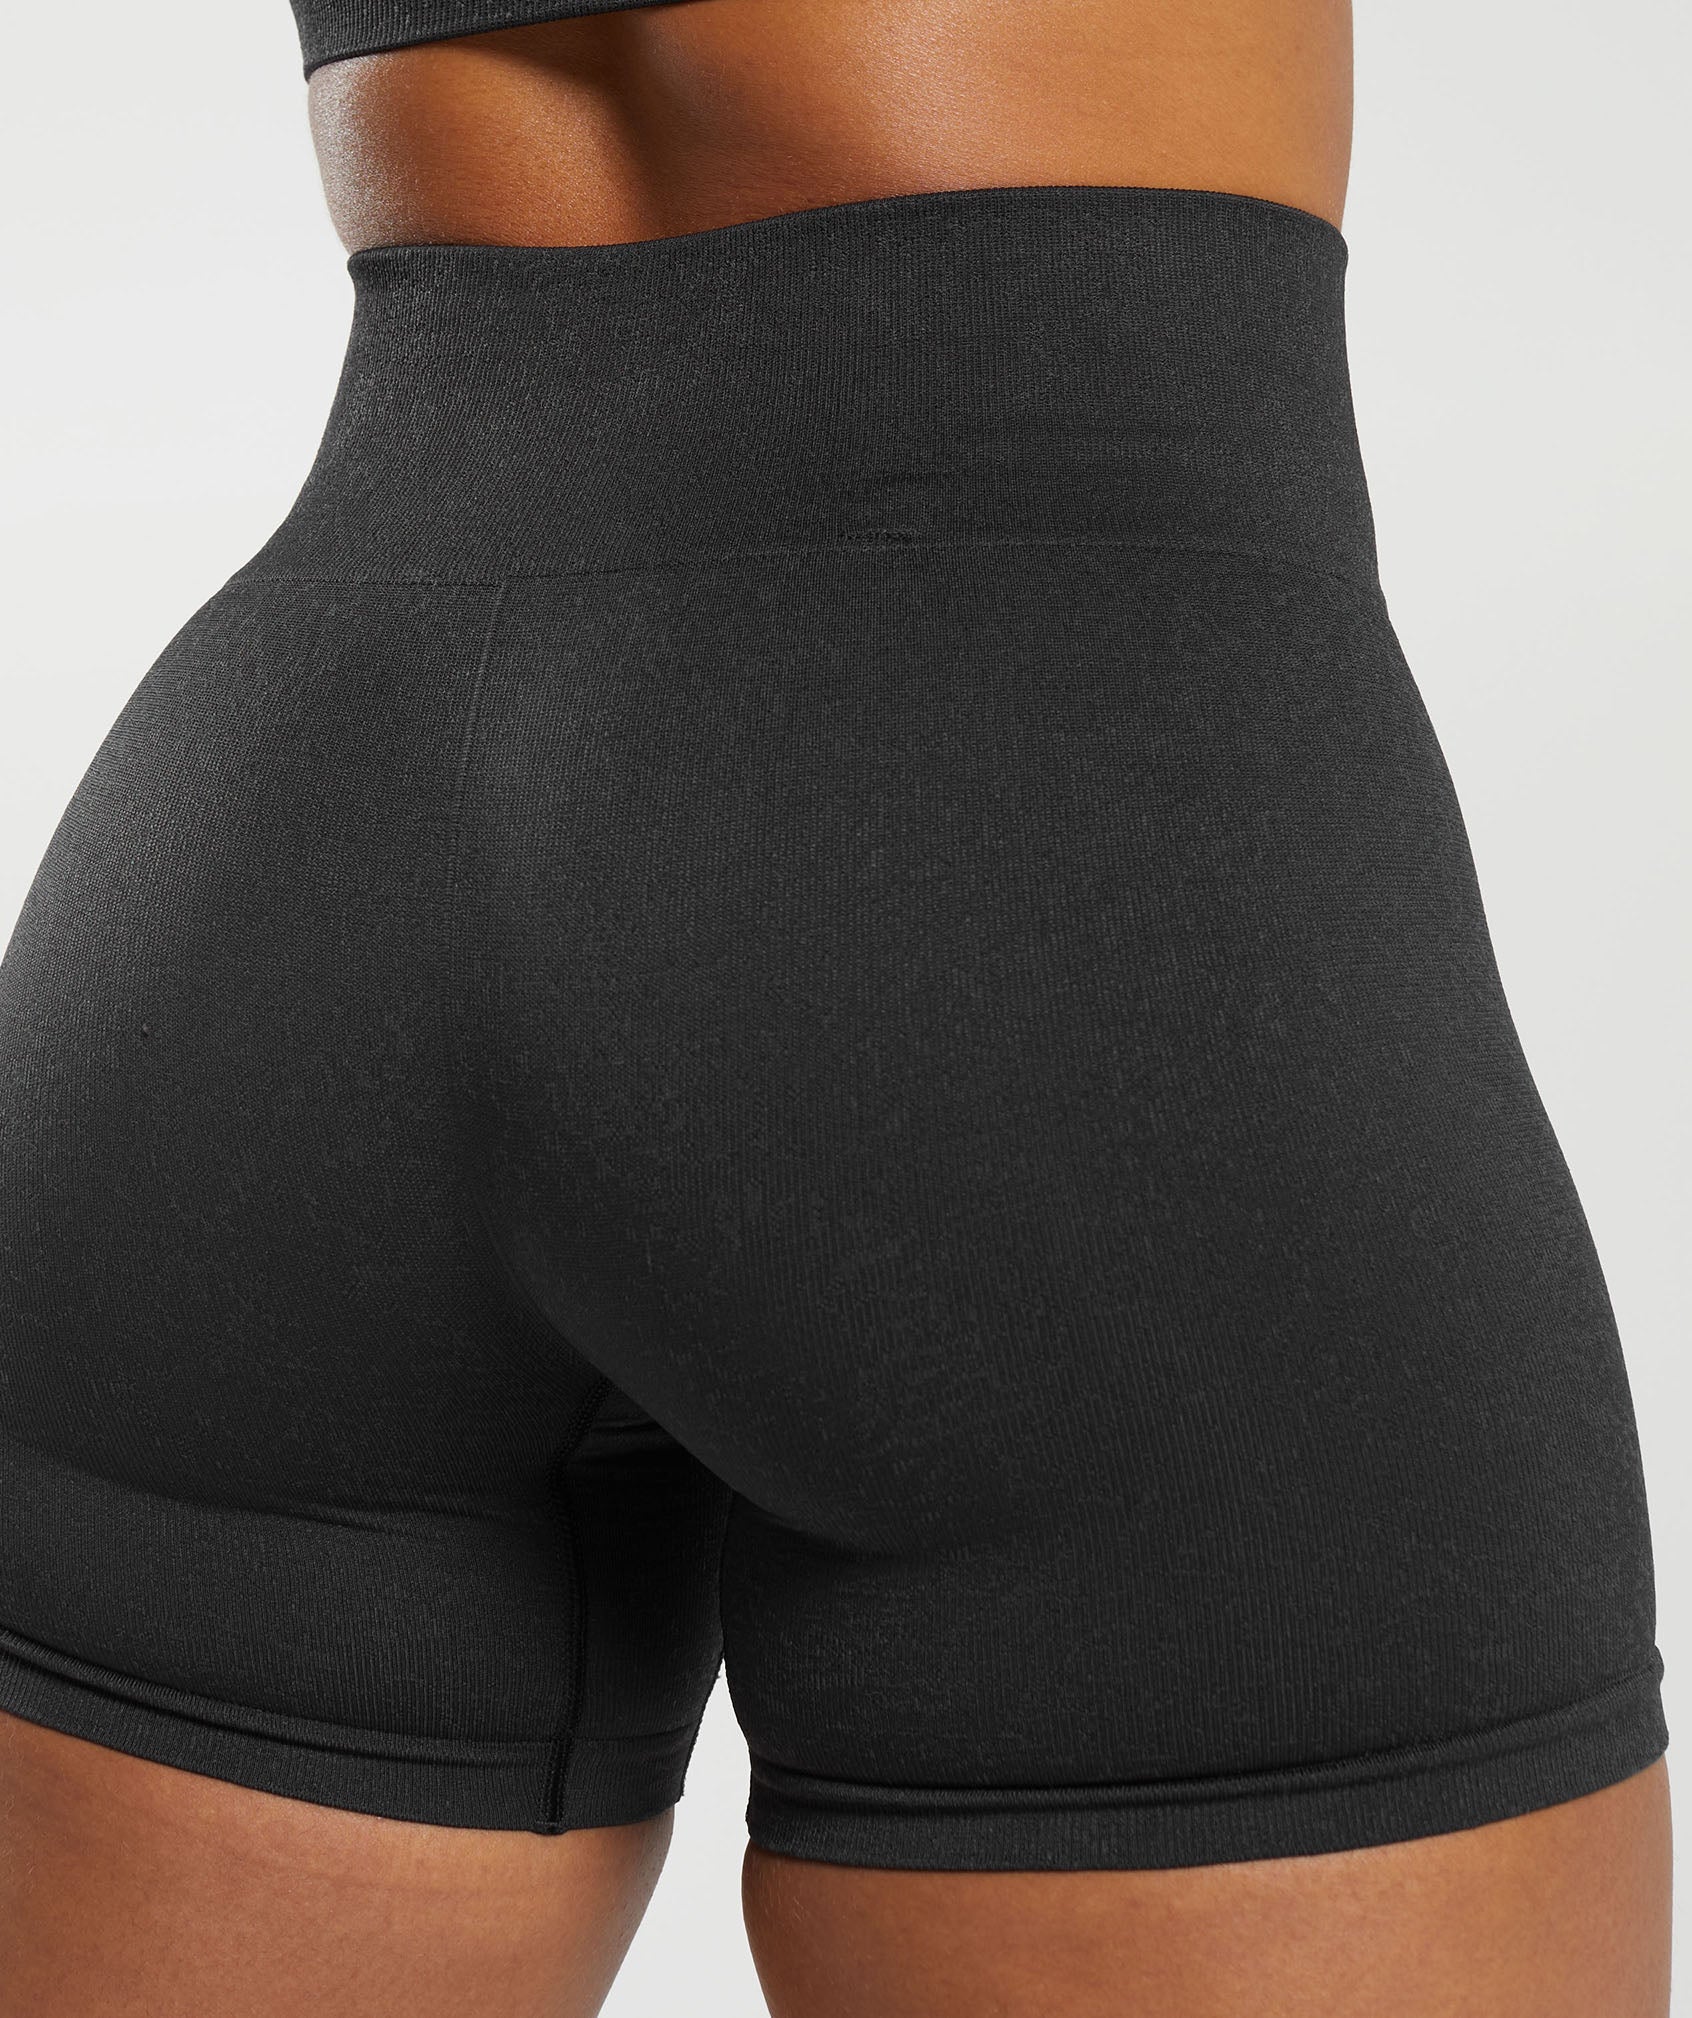 Adapt Fleck Seamless Shorts in Black/Smokey Grey - view 6